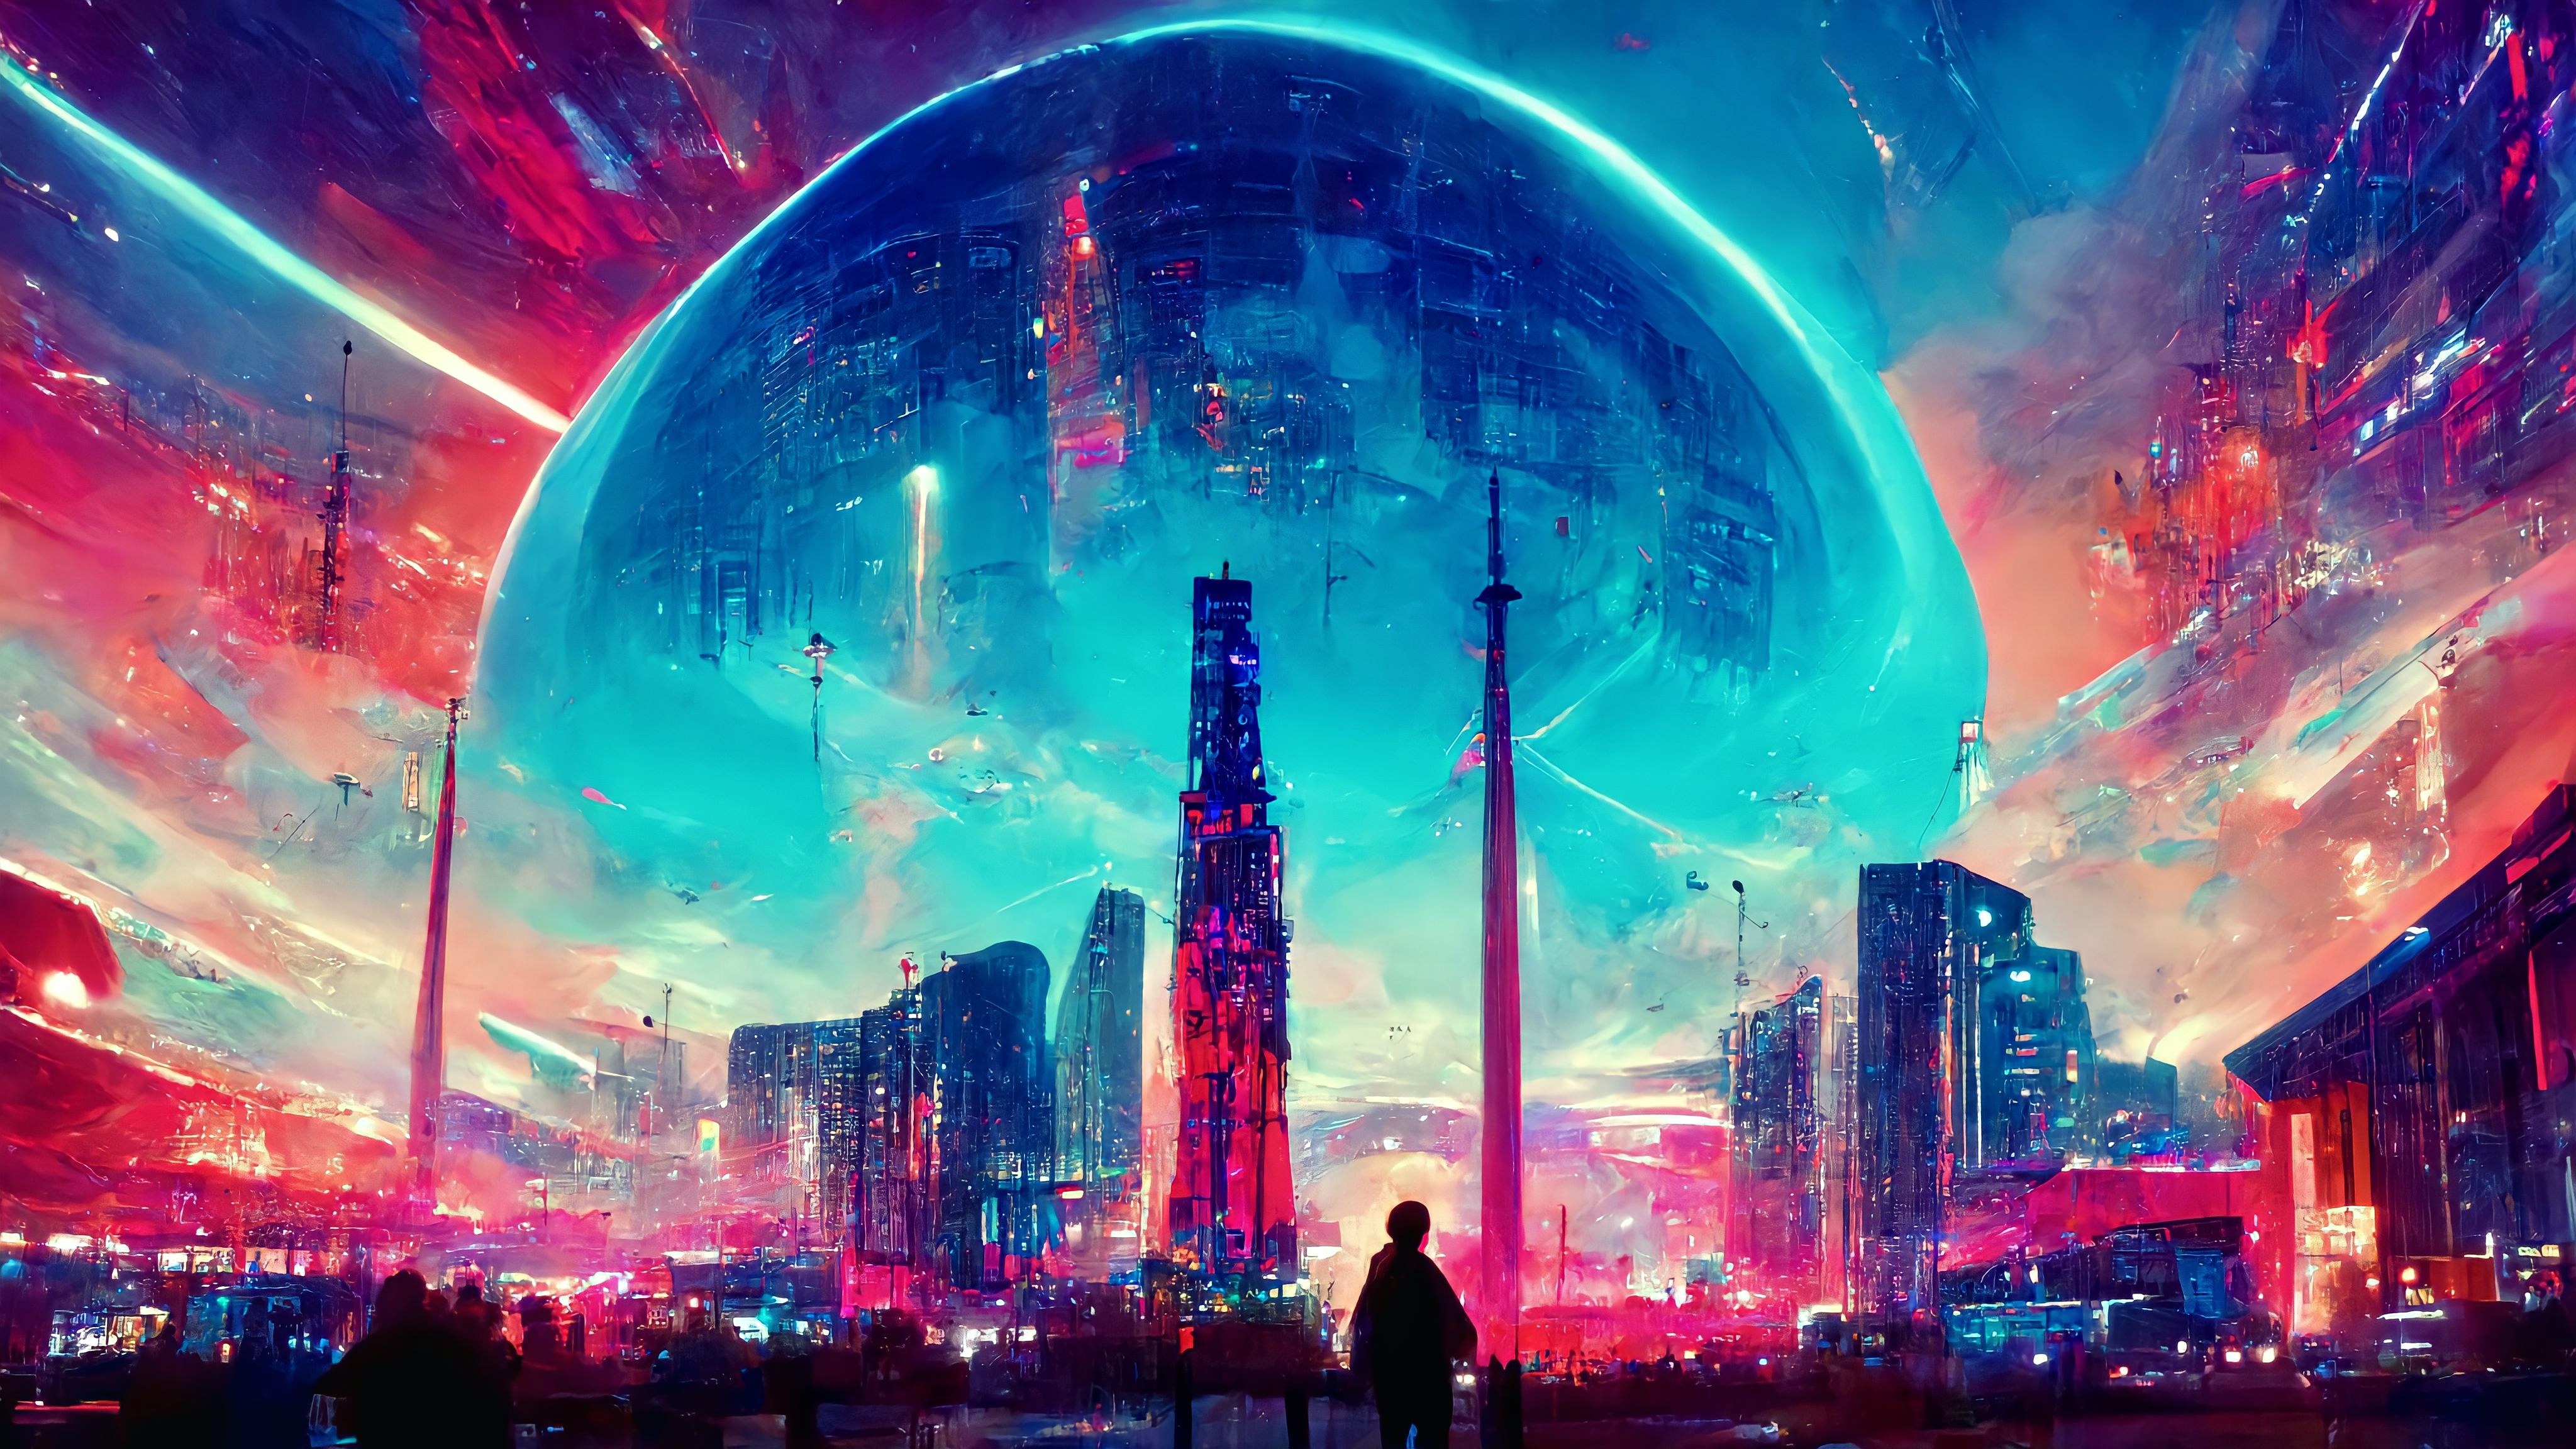 General 4096x2304 colorful neon city cyberpunk dome AI art futuristic technology fantasy art